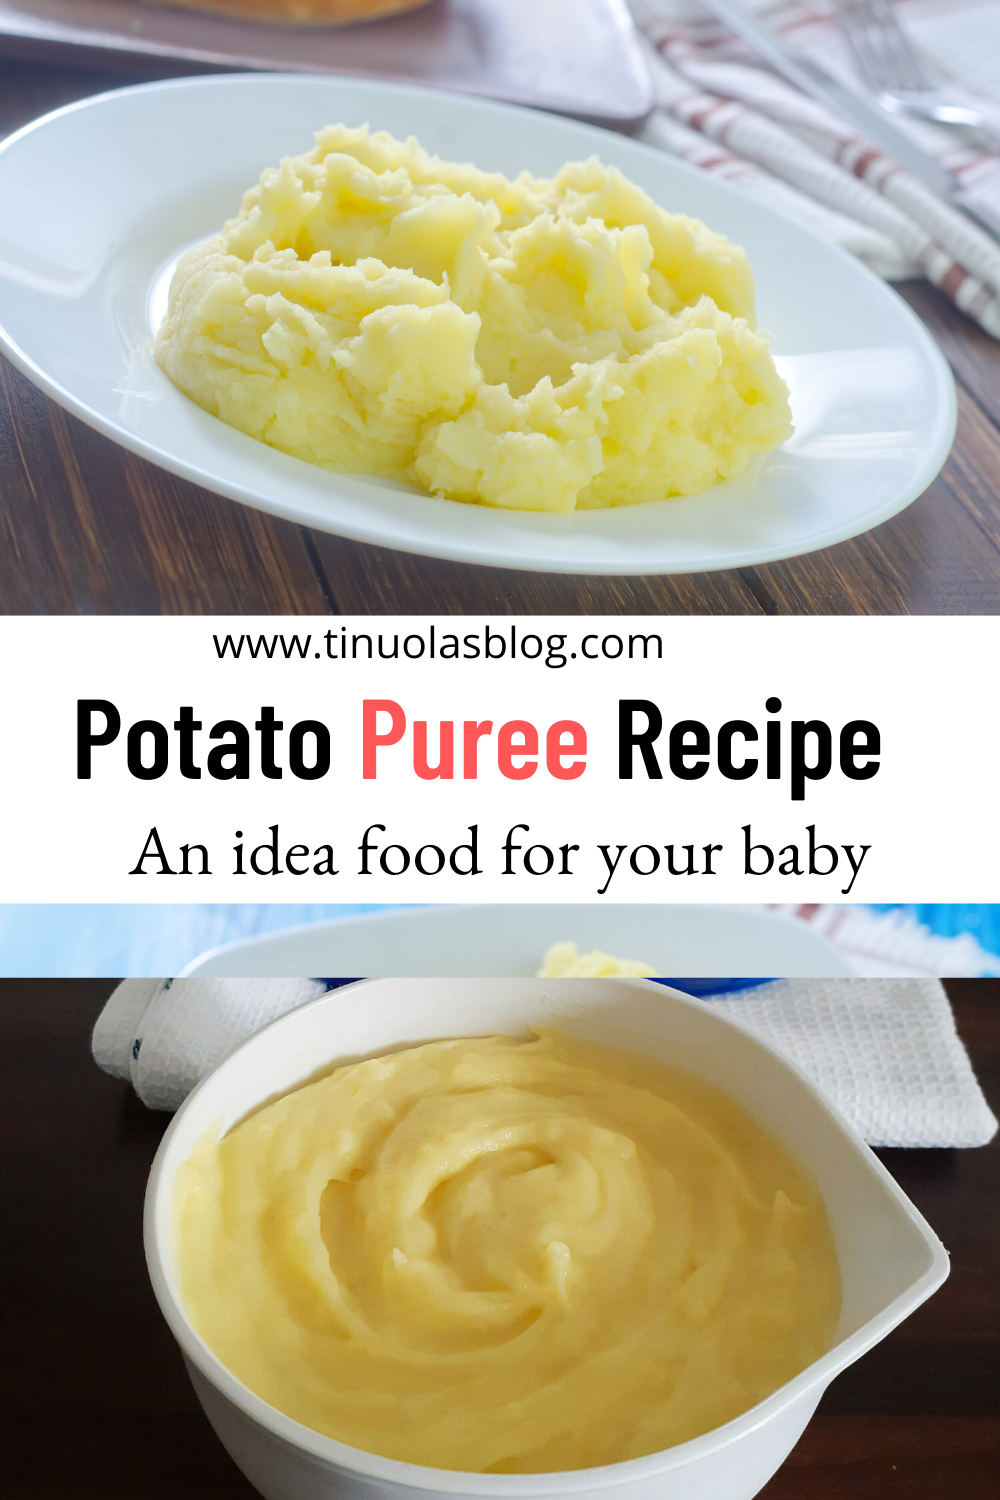 Potato Puree Recipe: How To Make Delicious Potato Puree